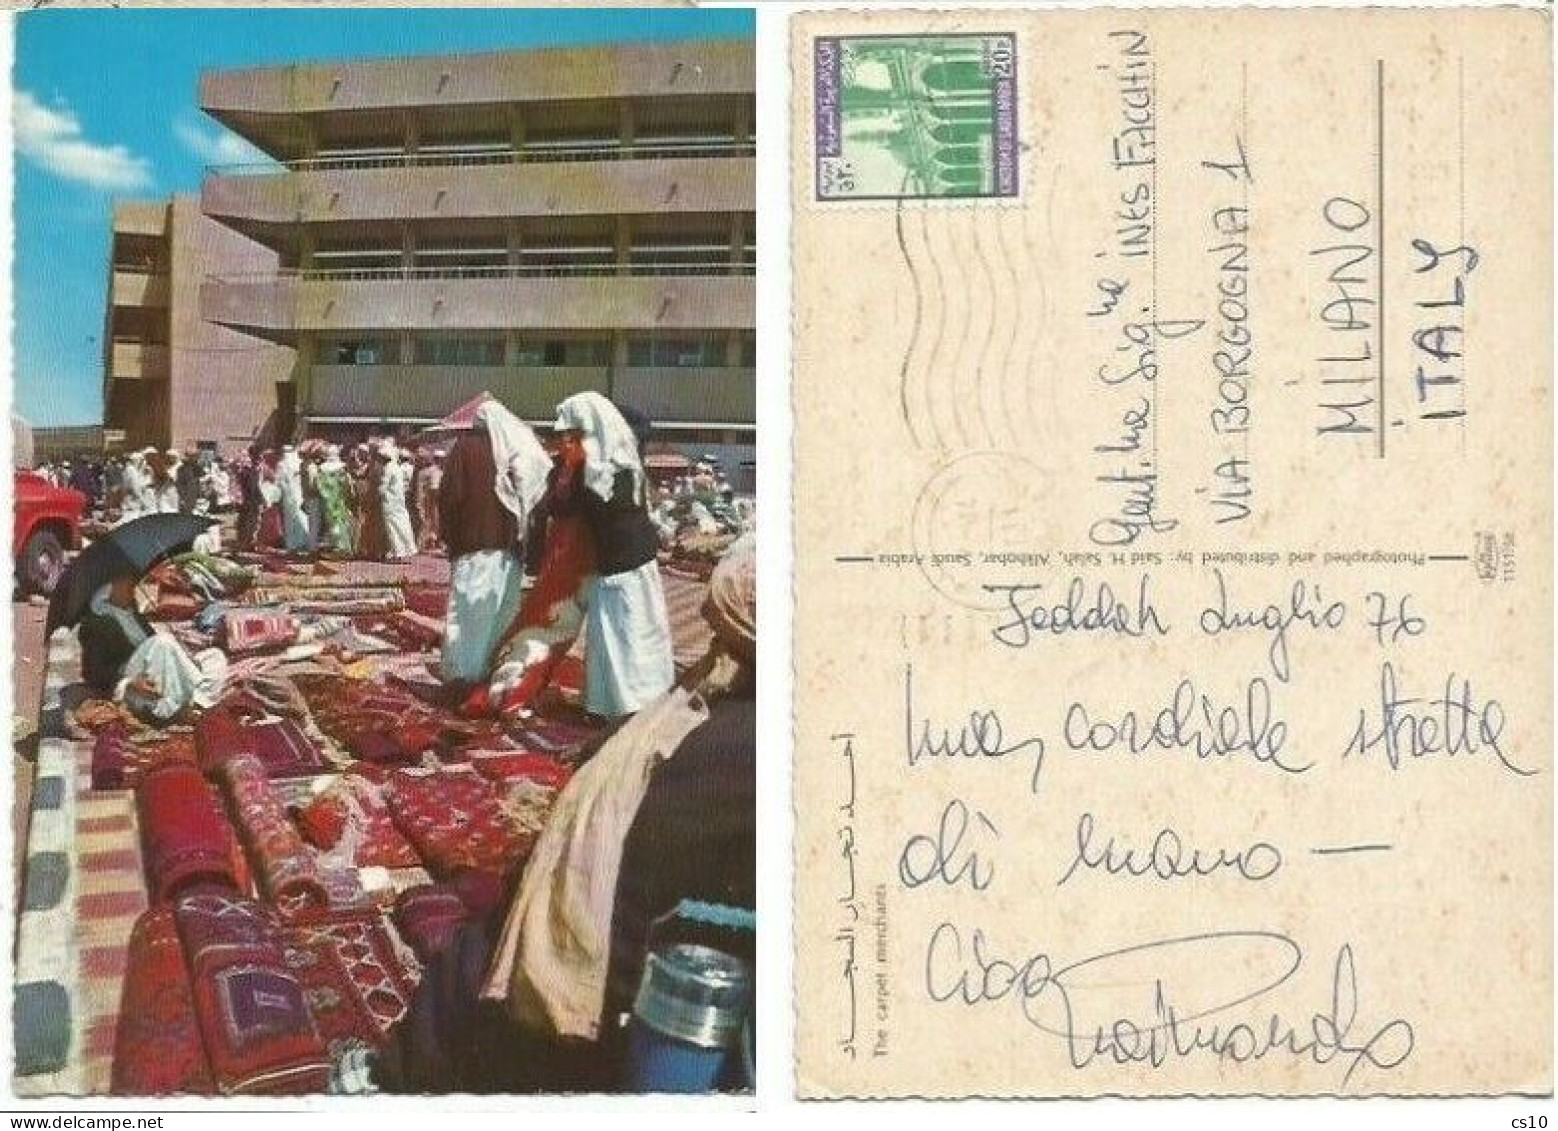 Saudi Arabia The Carpet Merchants - Pcard Jeddah July1976 X Italy With Regular Issue P.20 Solo Franking - Händler